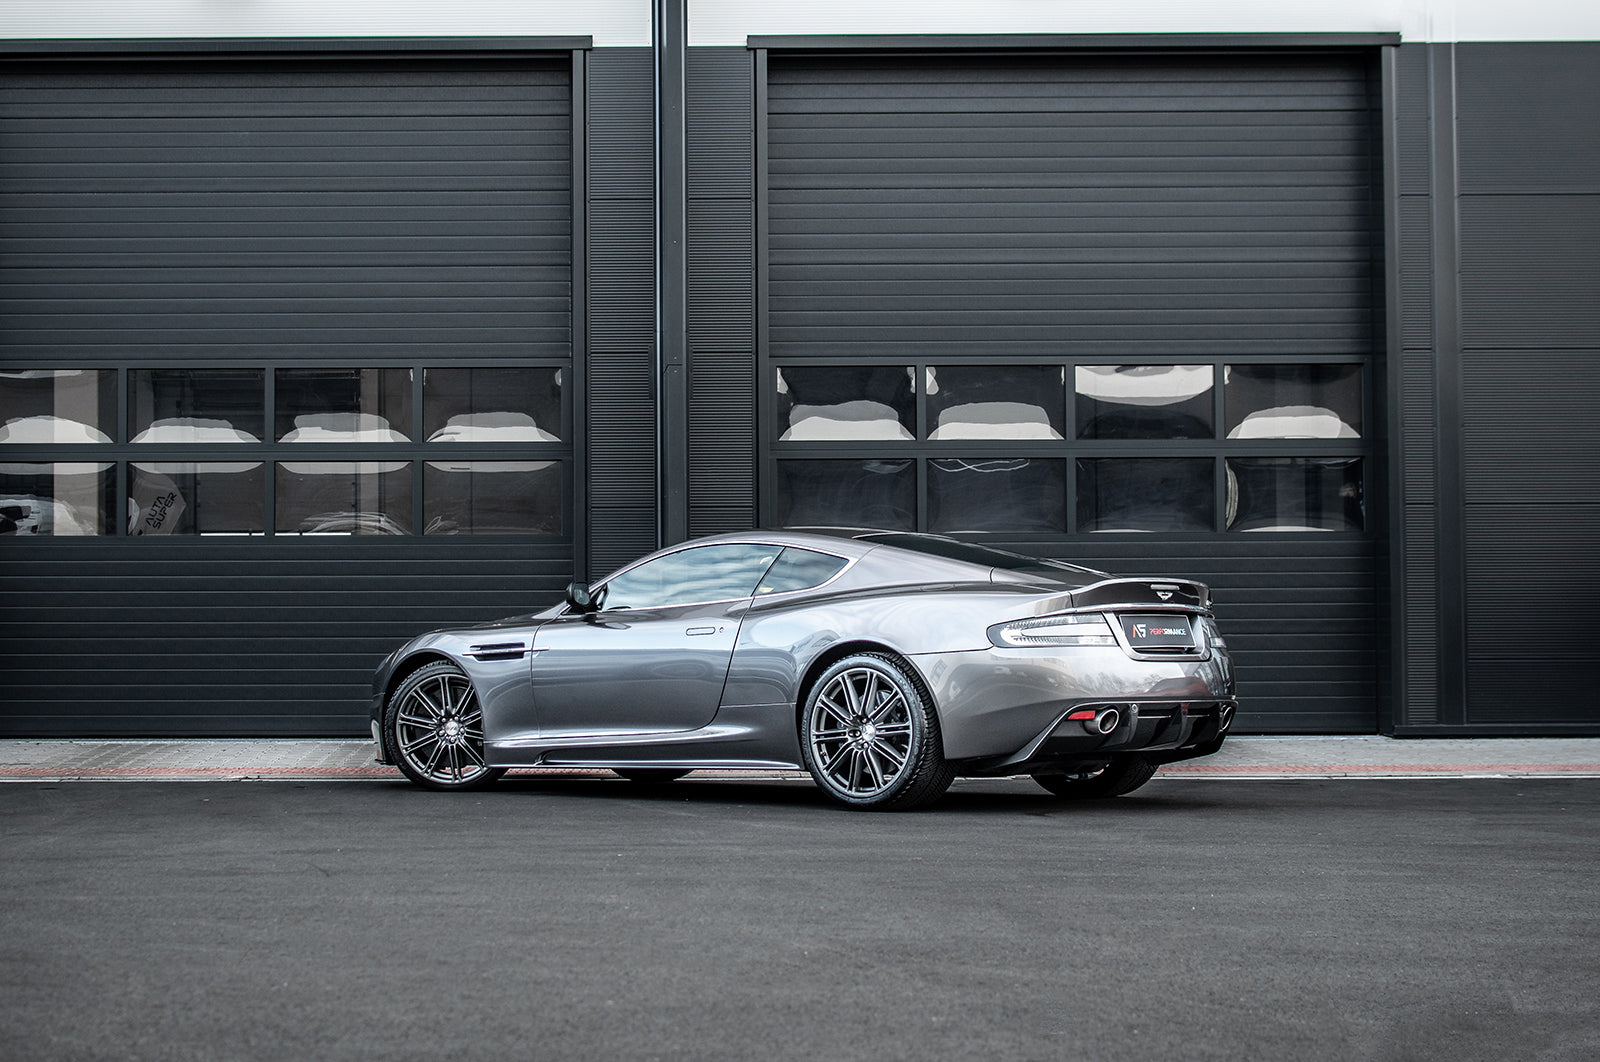 Aston Martin DBS - Supergloss Metallic Gunmetal